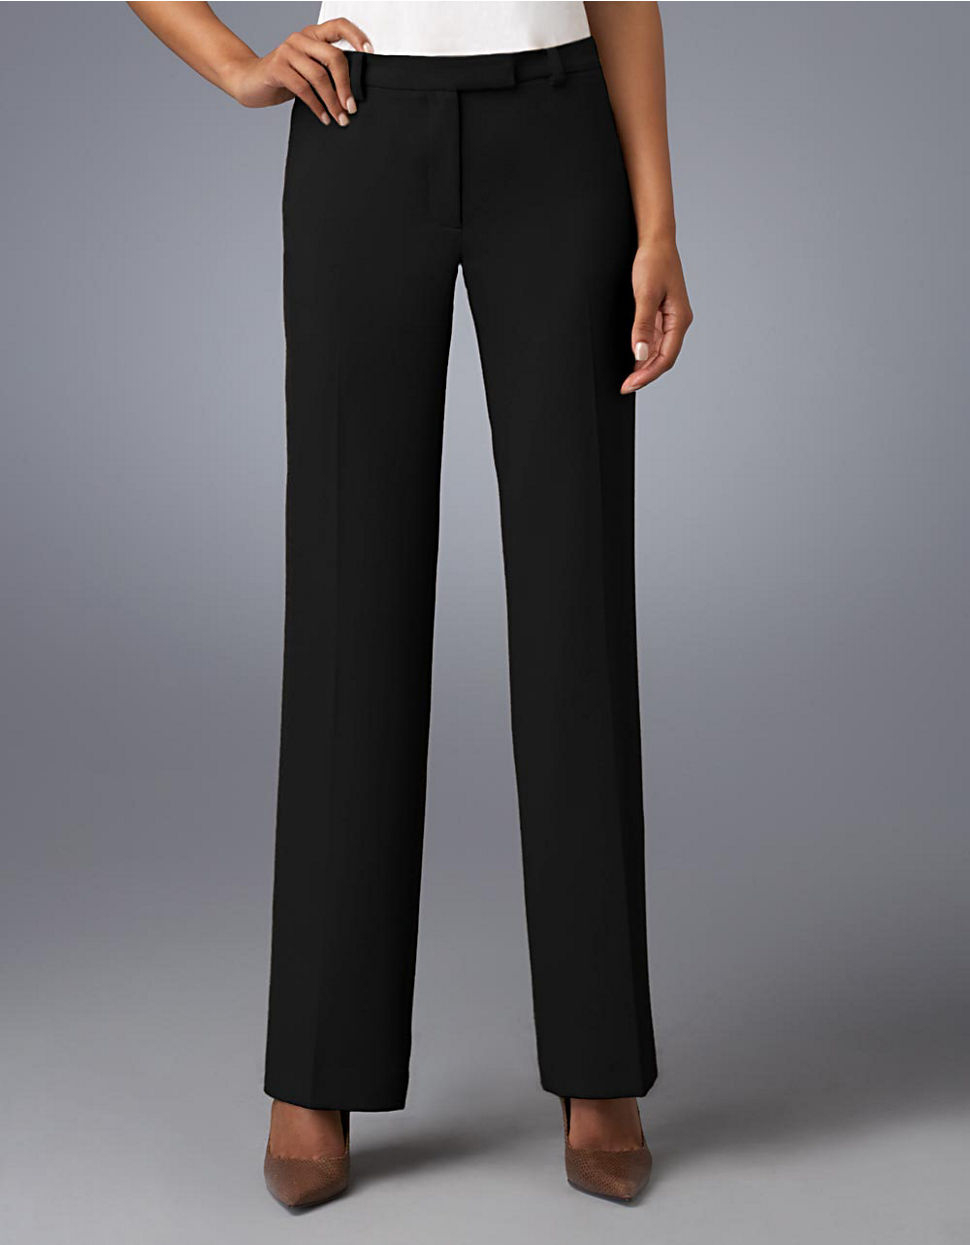 Lyst - Calvin Klein Madison Straight-leg Pants in Black